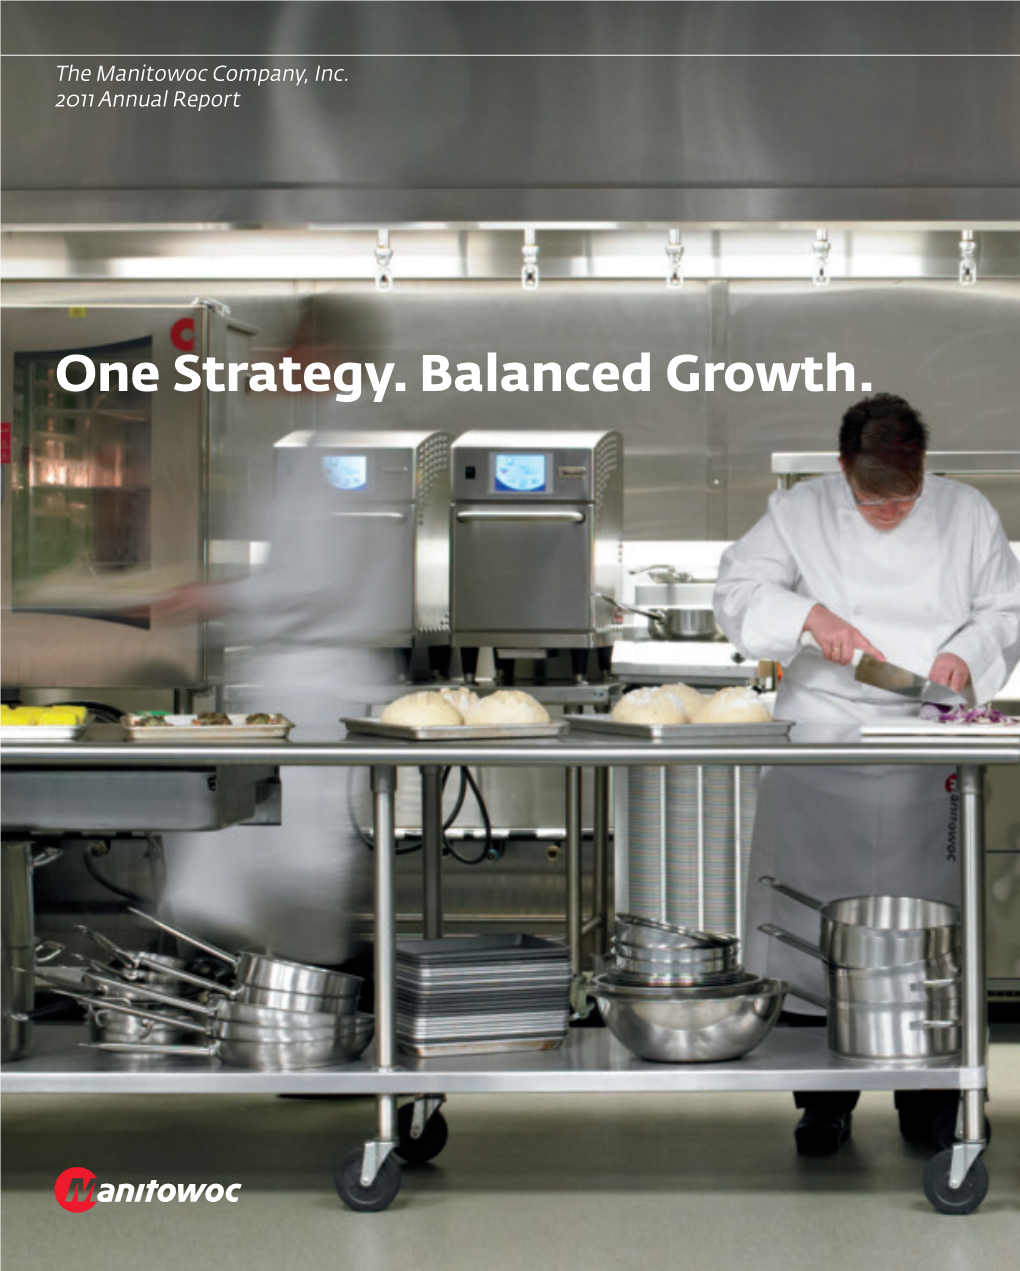 One Strategy. Balanced Growth